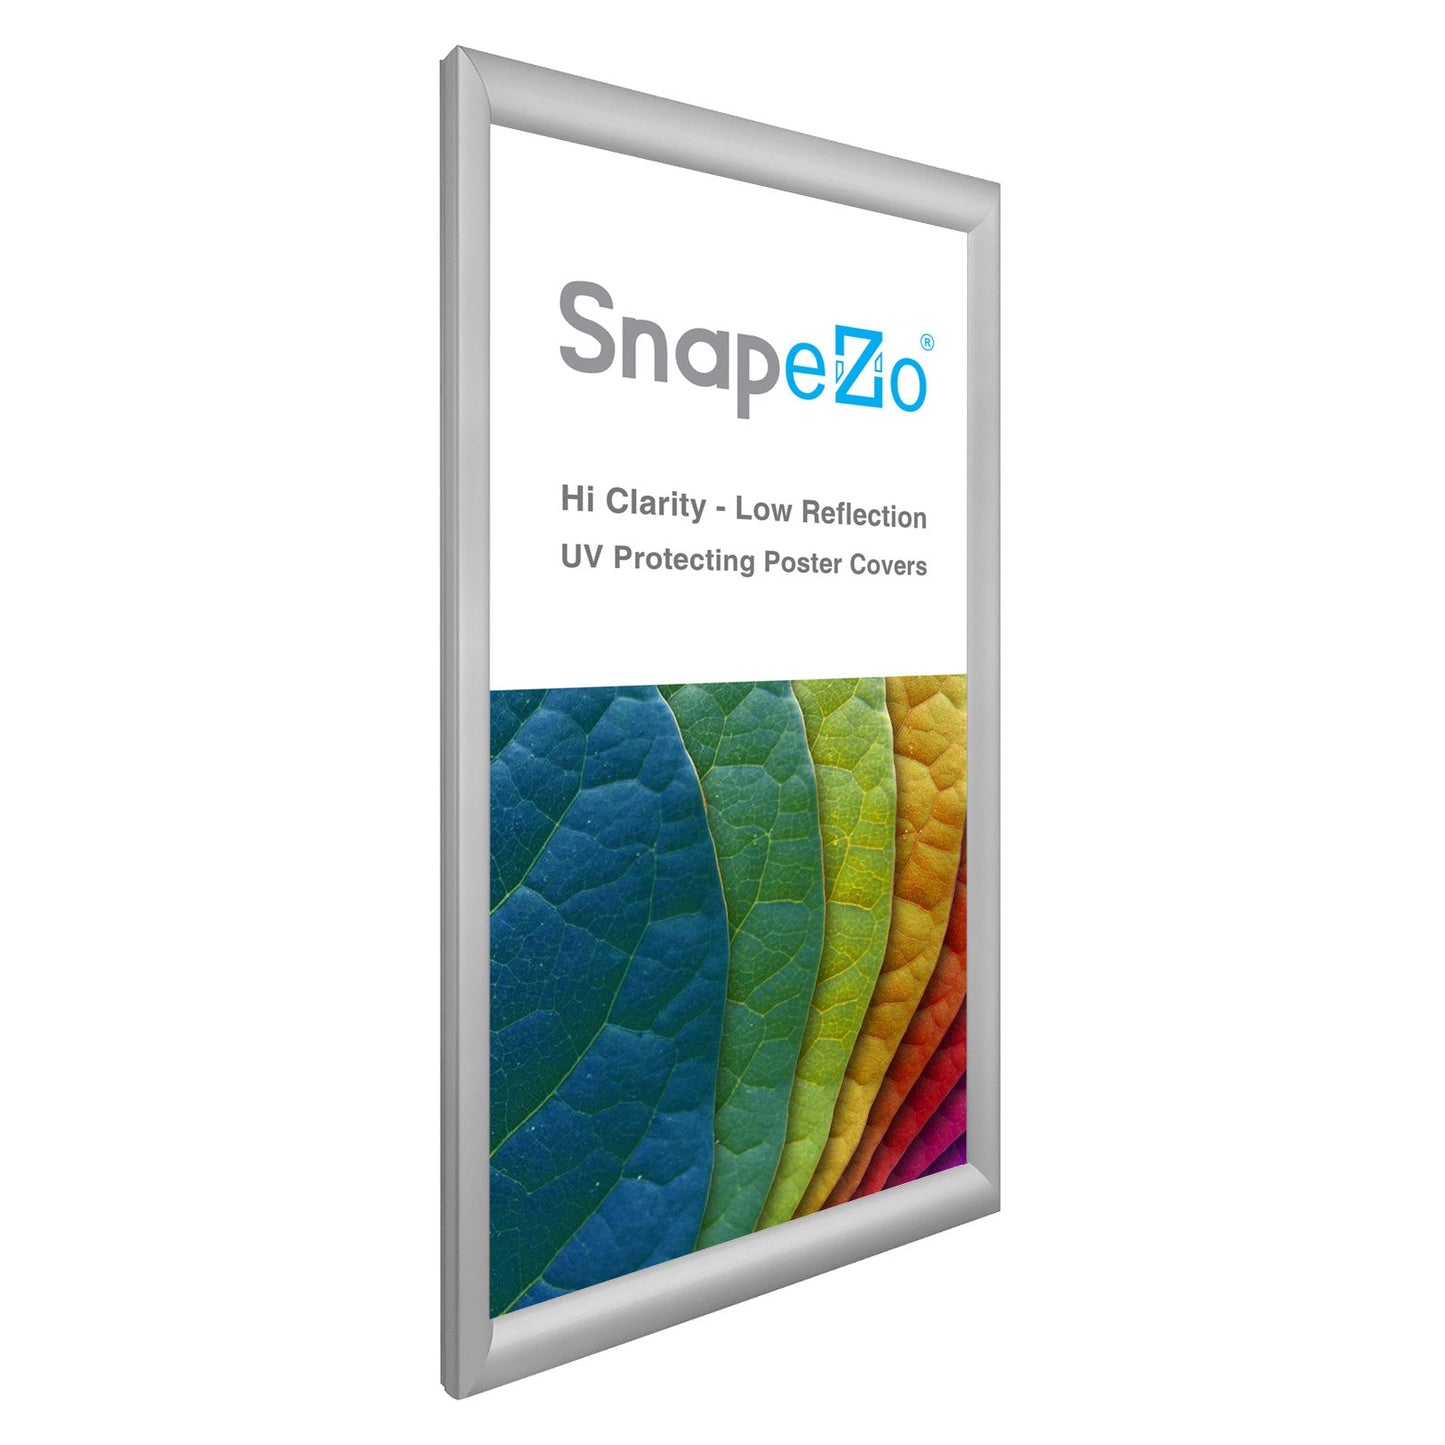 15x30 Silver SnapeZo® Snap Frame - 1.2" Profile